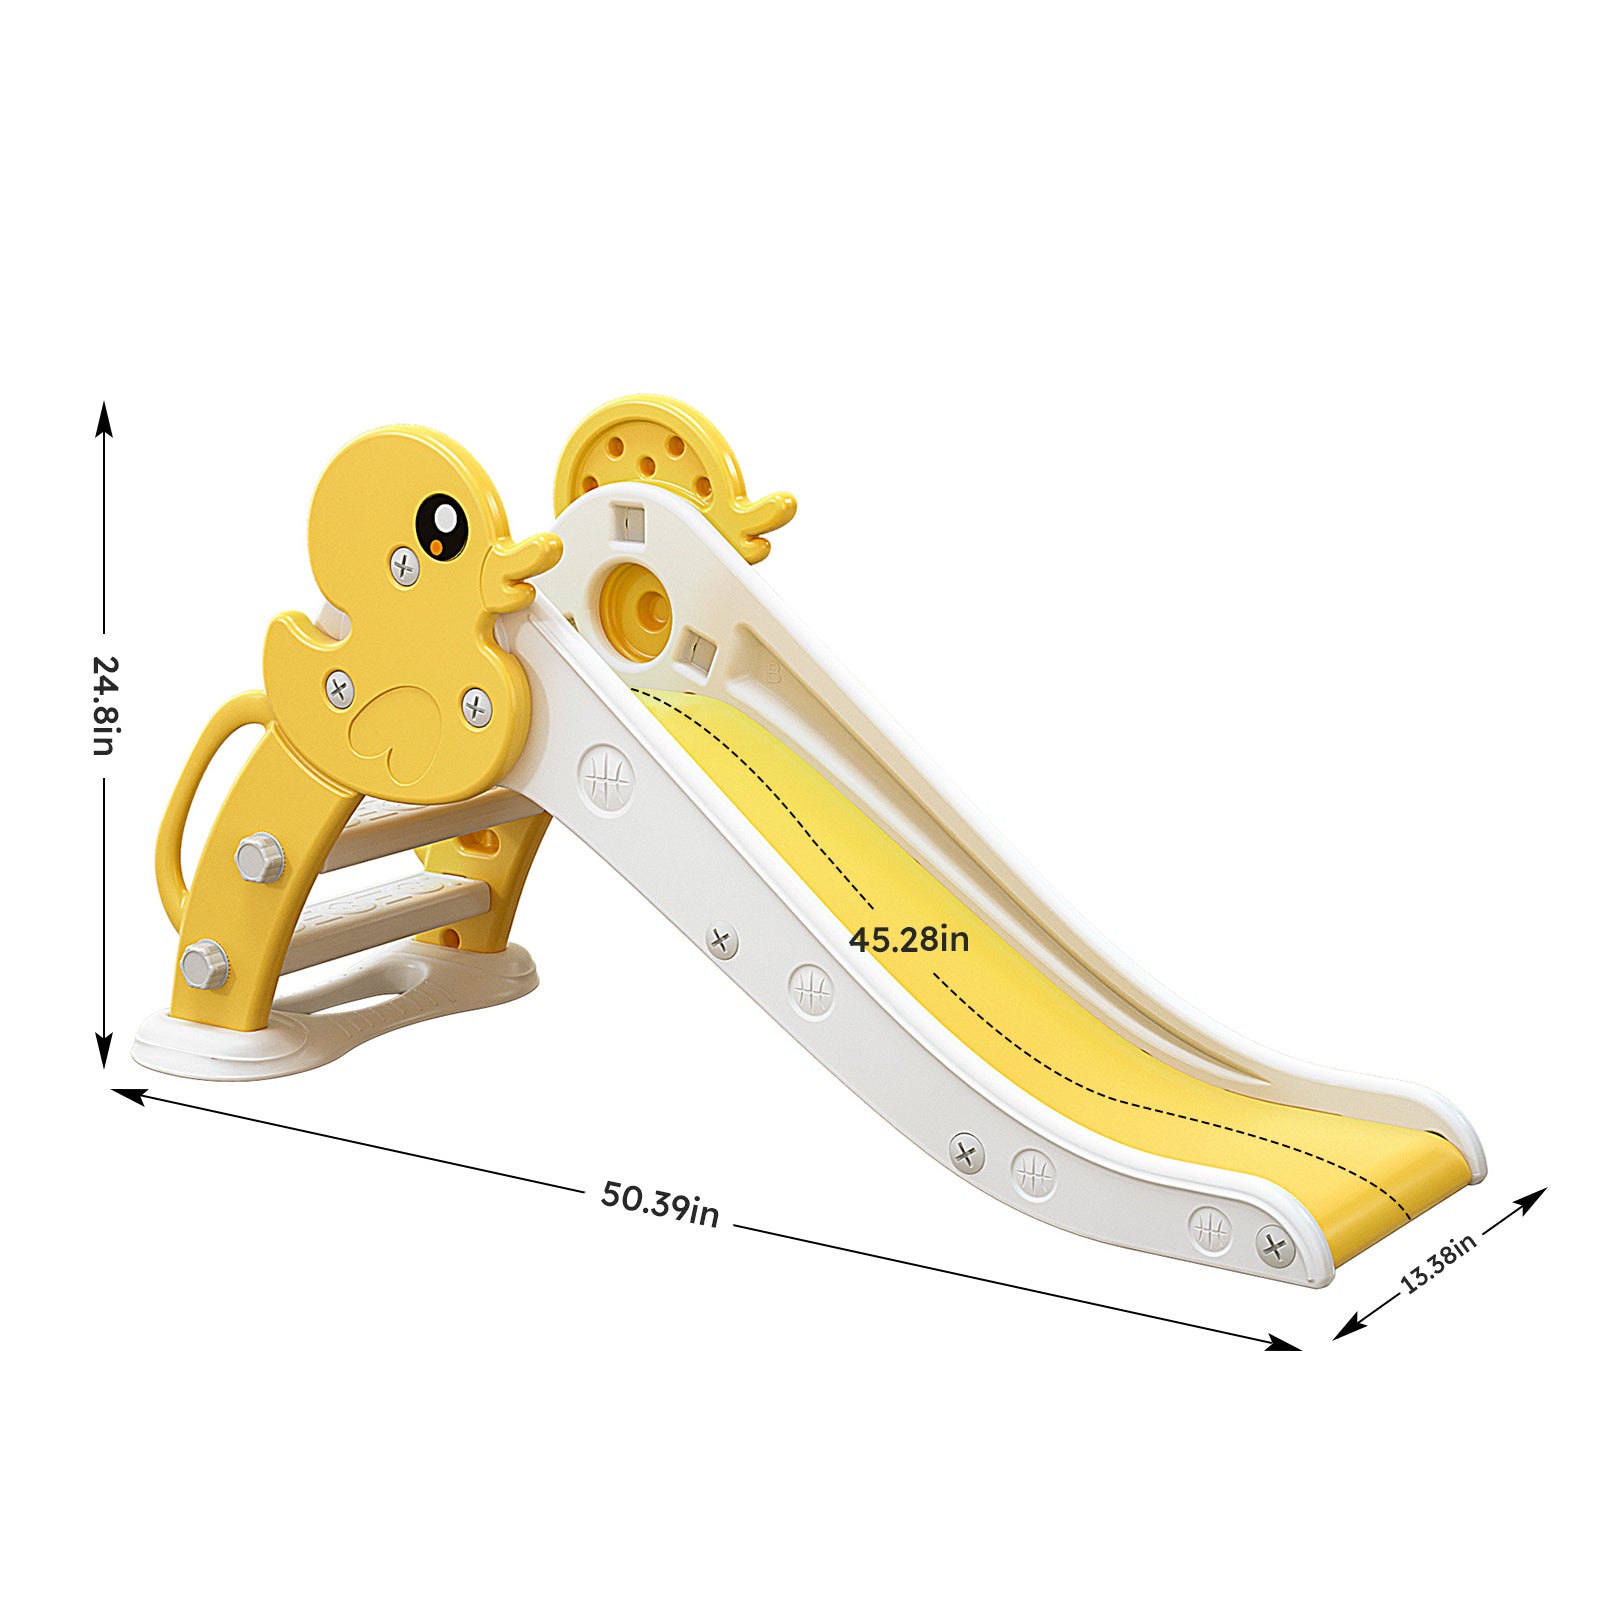 Kid Slide for Toddler Age 1-3 Indoor Pet duck yellow Plastic Slide Outdoor Playground Climber Slide - Tonkn